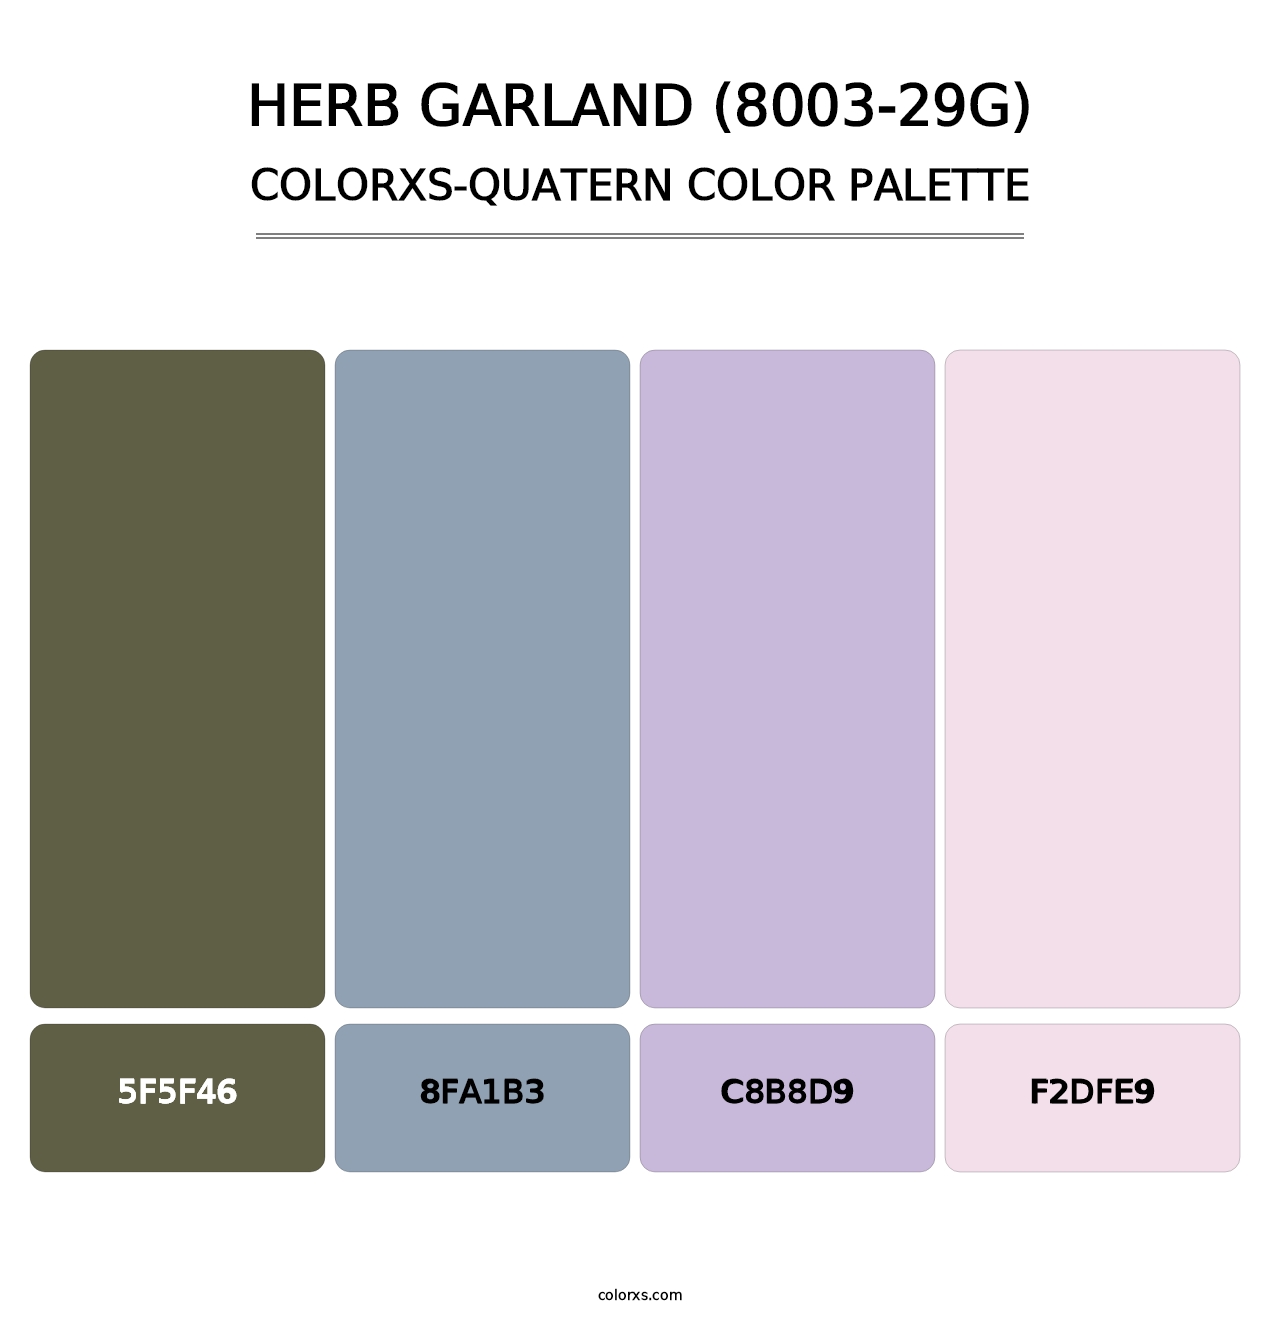 Herb Garland (8003-29G) - Colorxs Quatern Palette